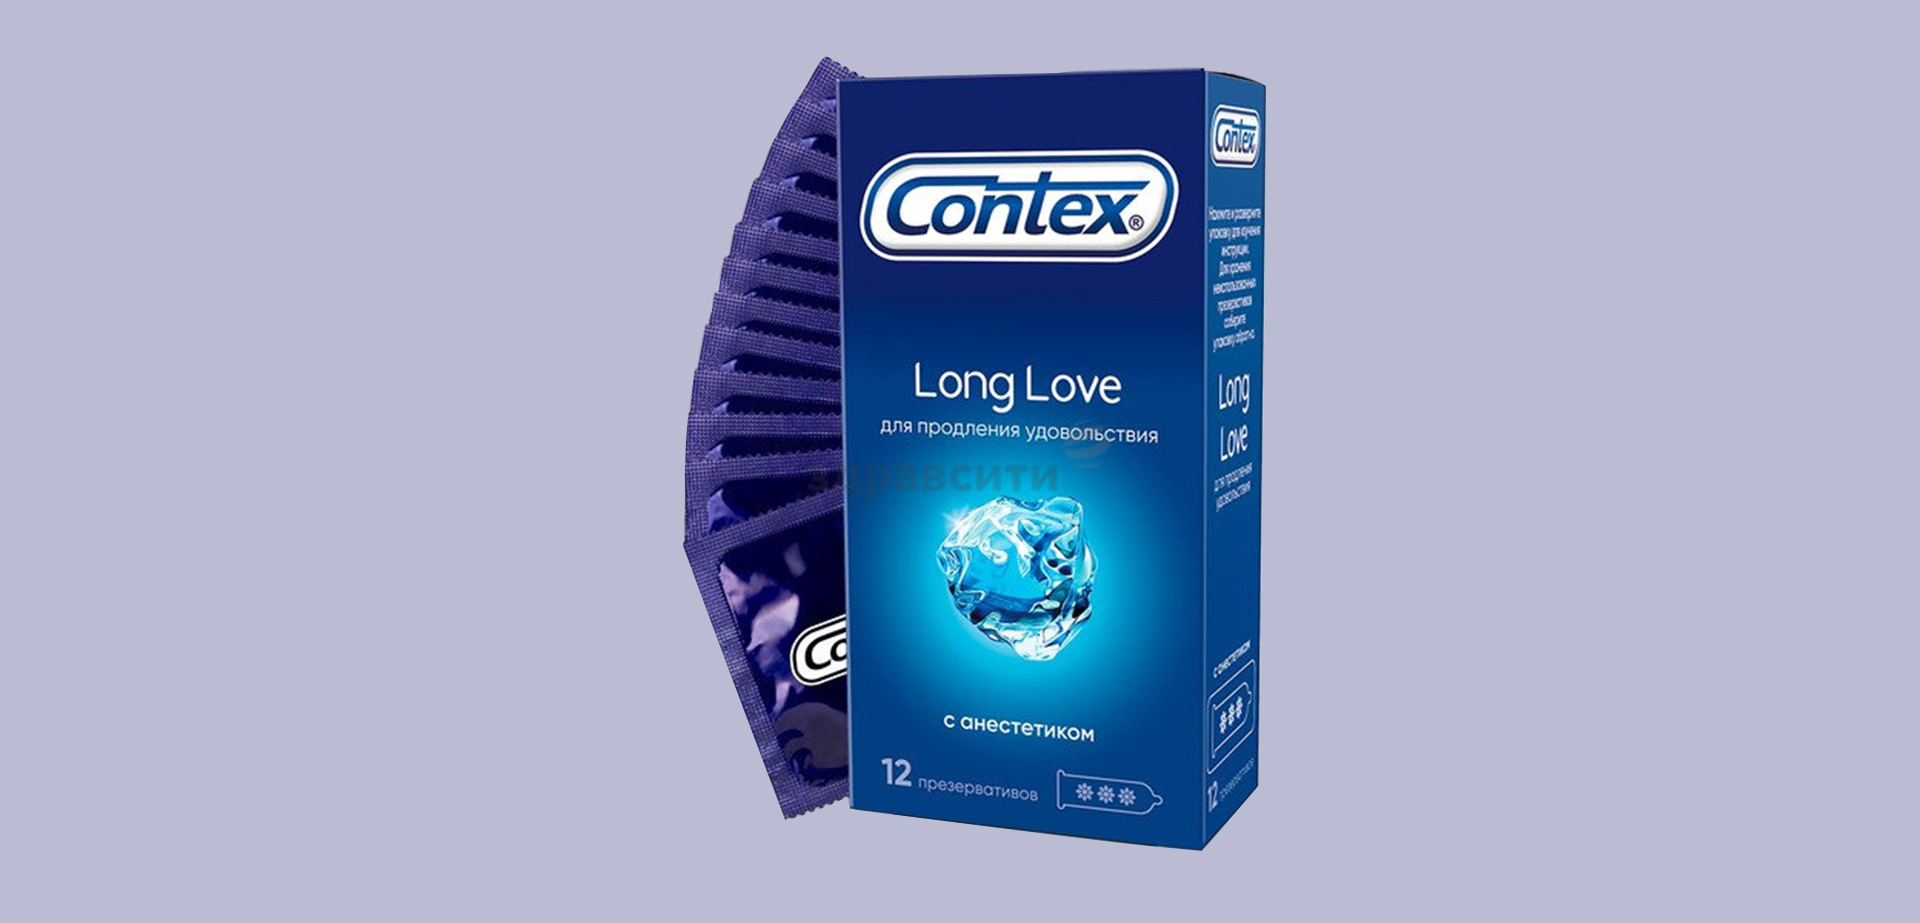 Коробка презервативов с анестетиком